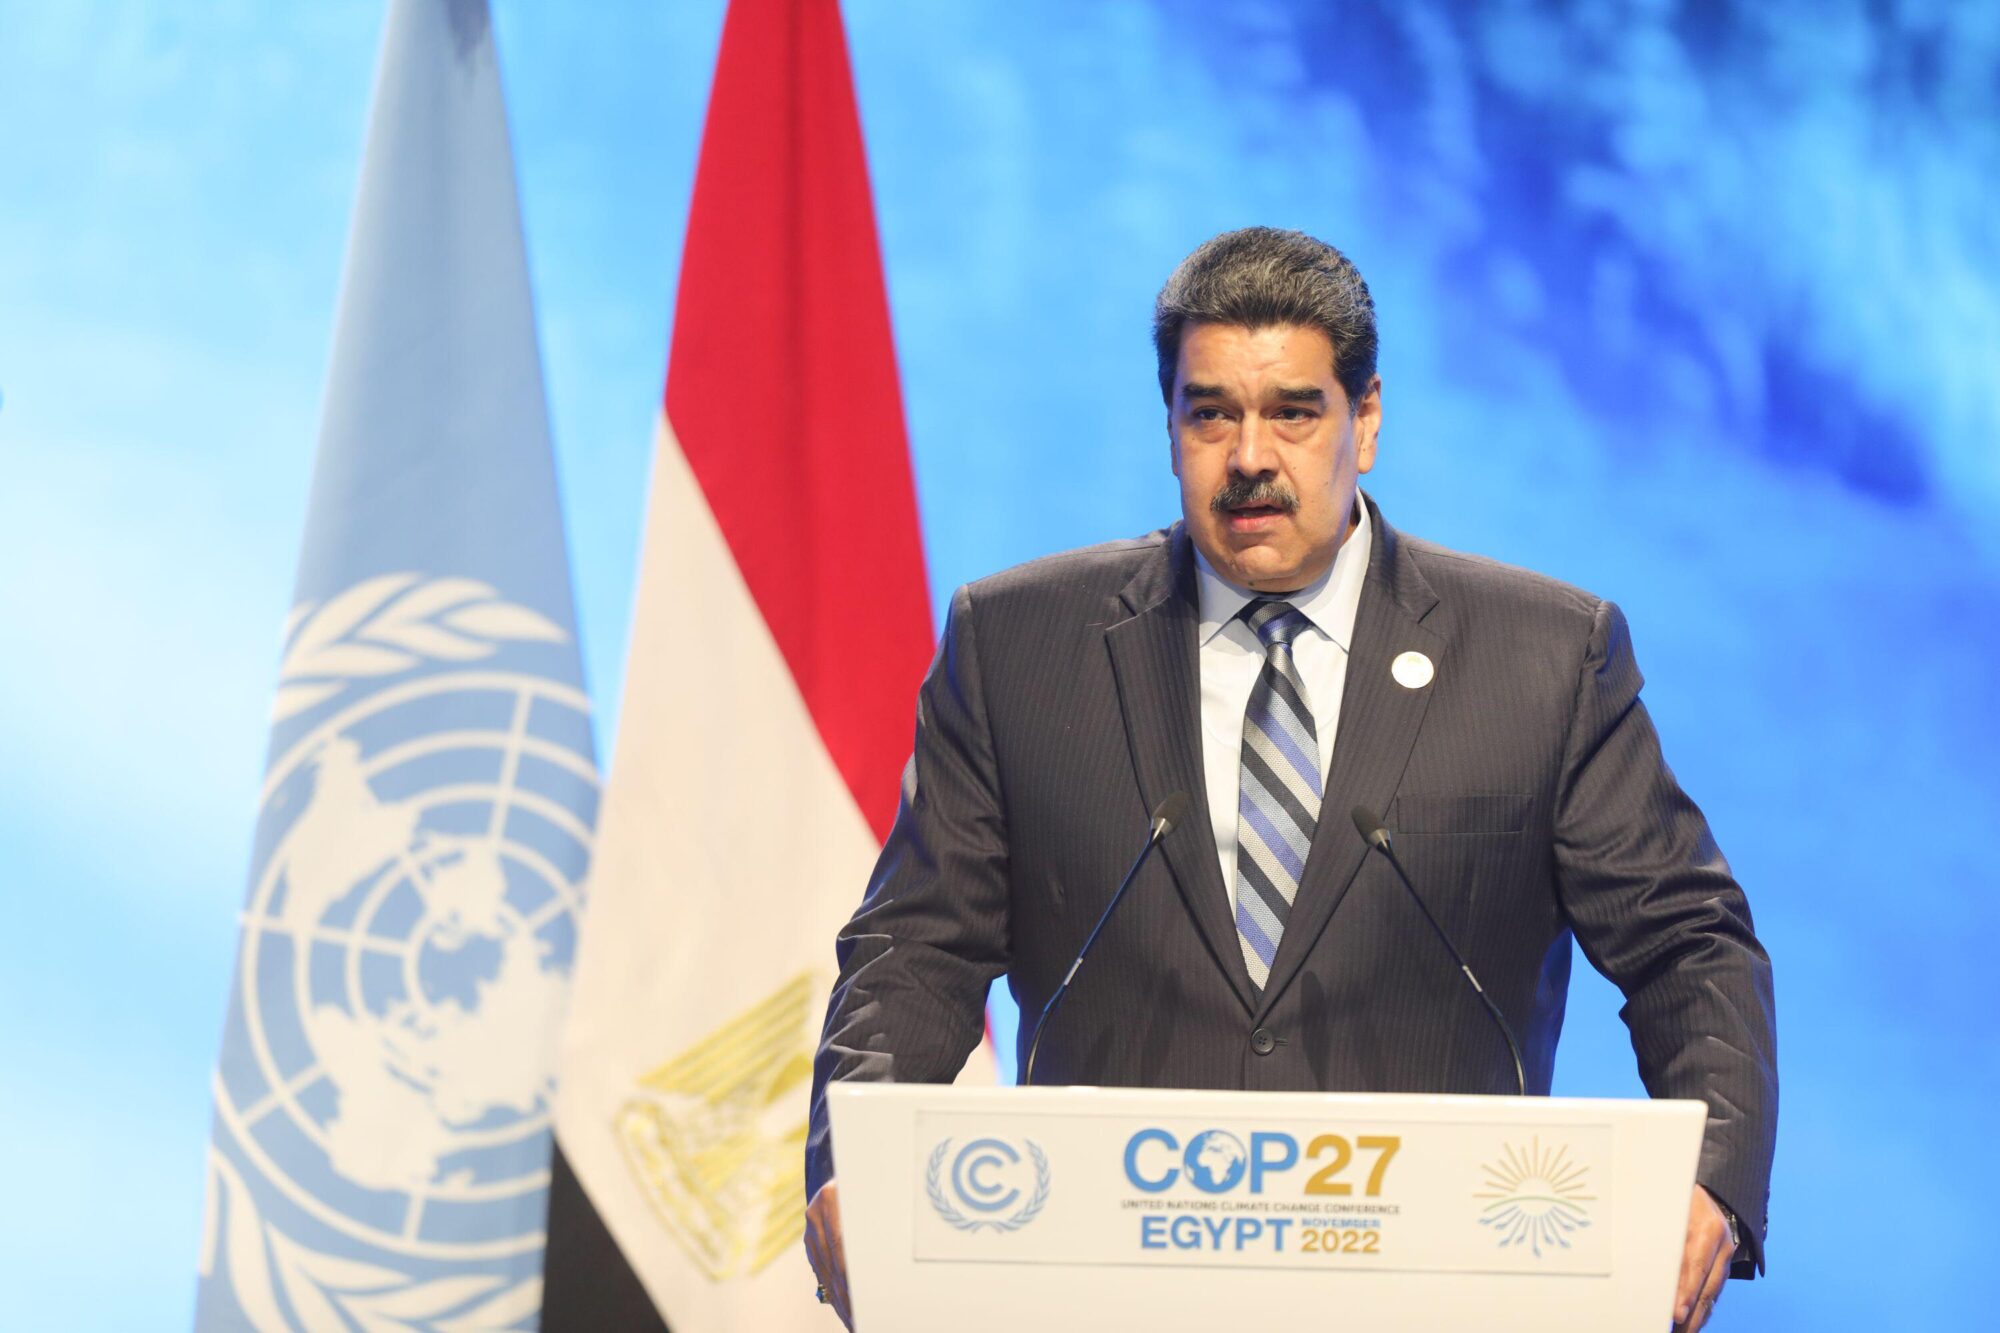 Nicolás Maduro speaks at COP27